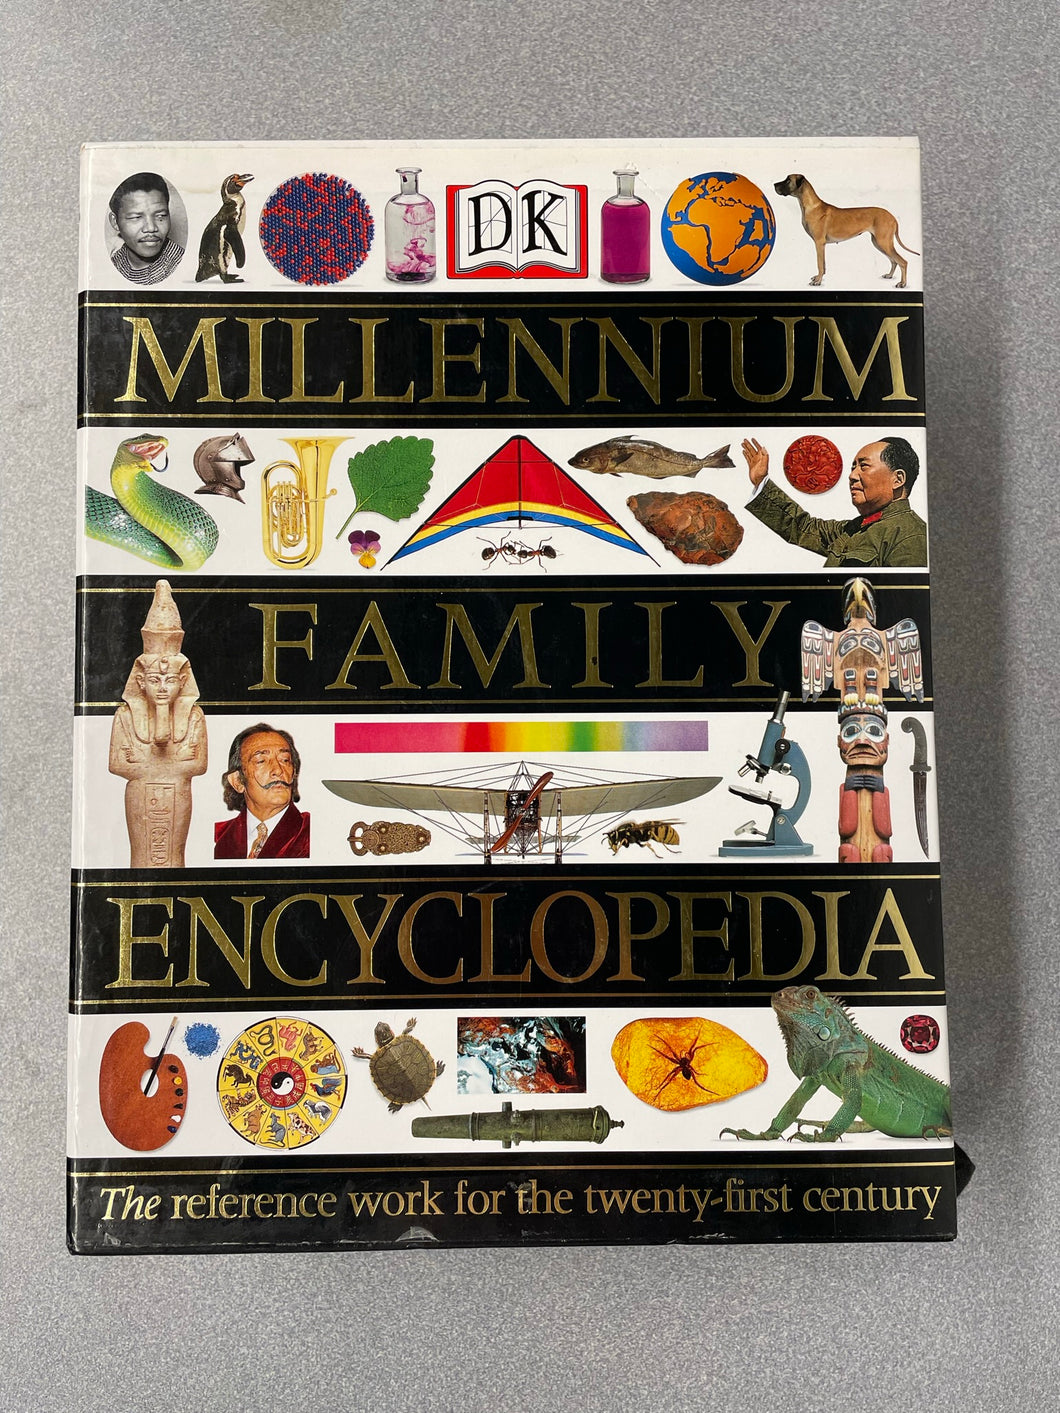 Millennium Family Encyclopedia, DK Publishing, Inc [1997] REF 8/23